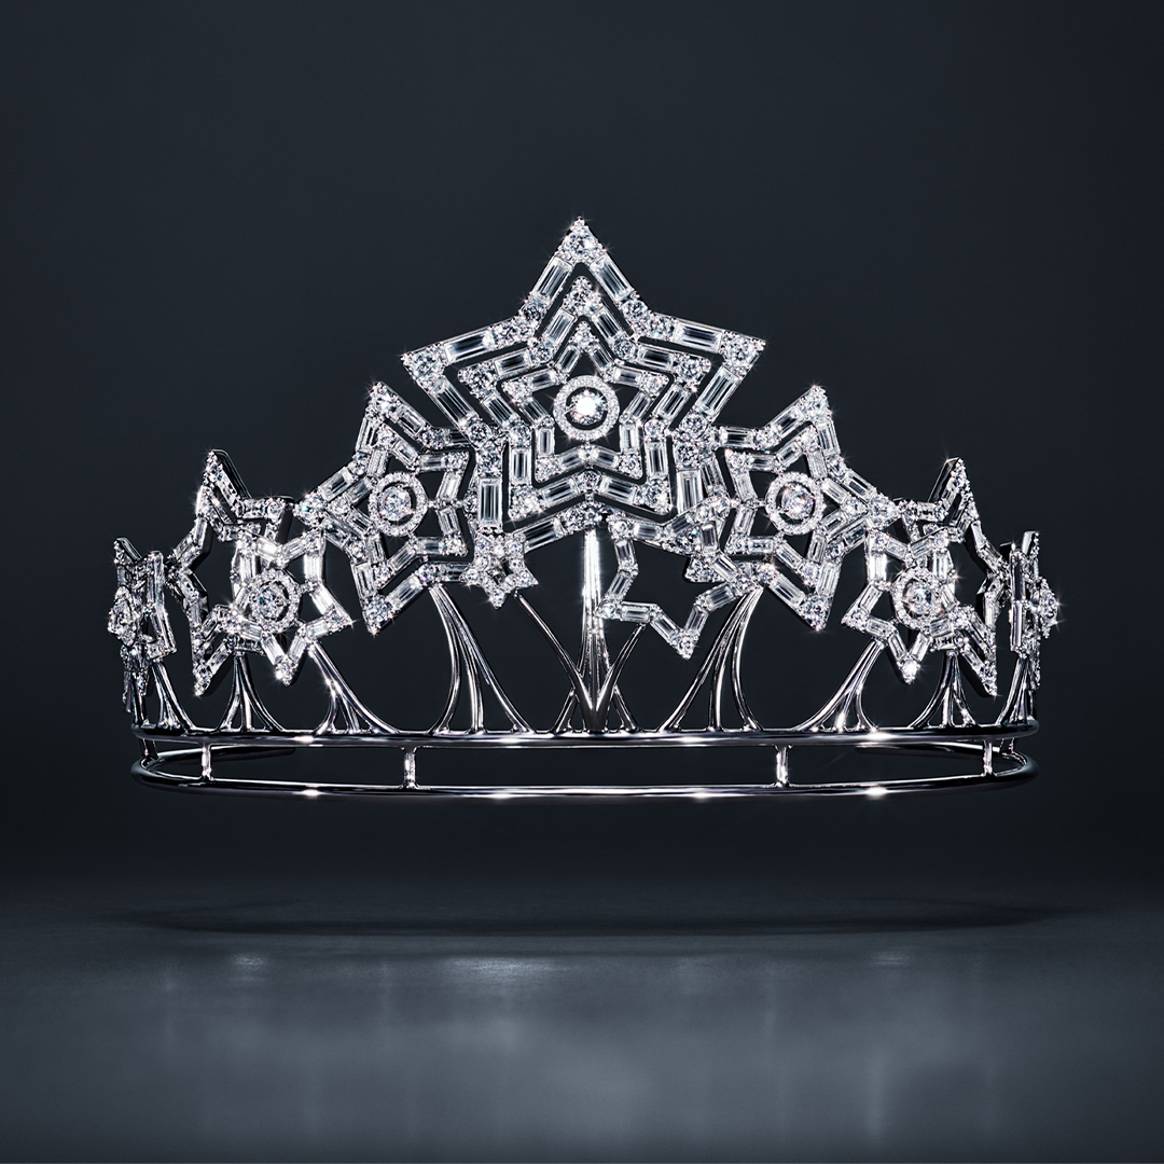 Image: Swarovski; The Swarovski tiara designed for Vienna Opera Ball 2023